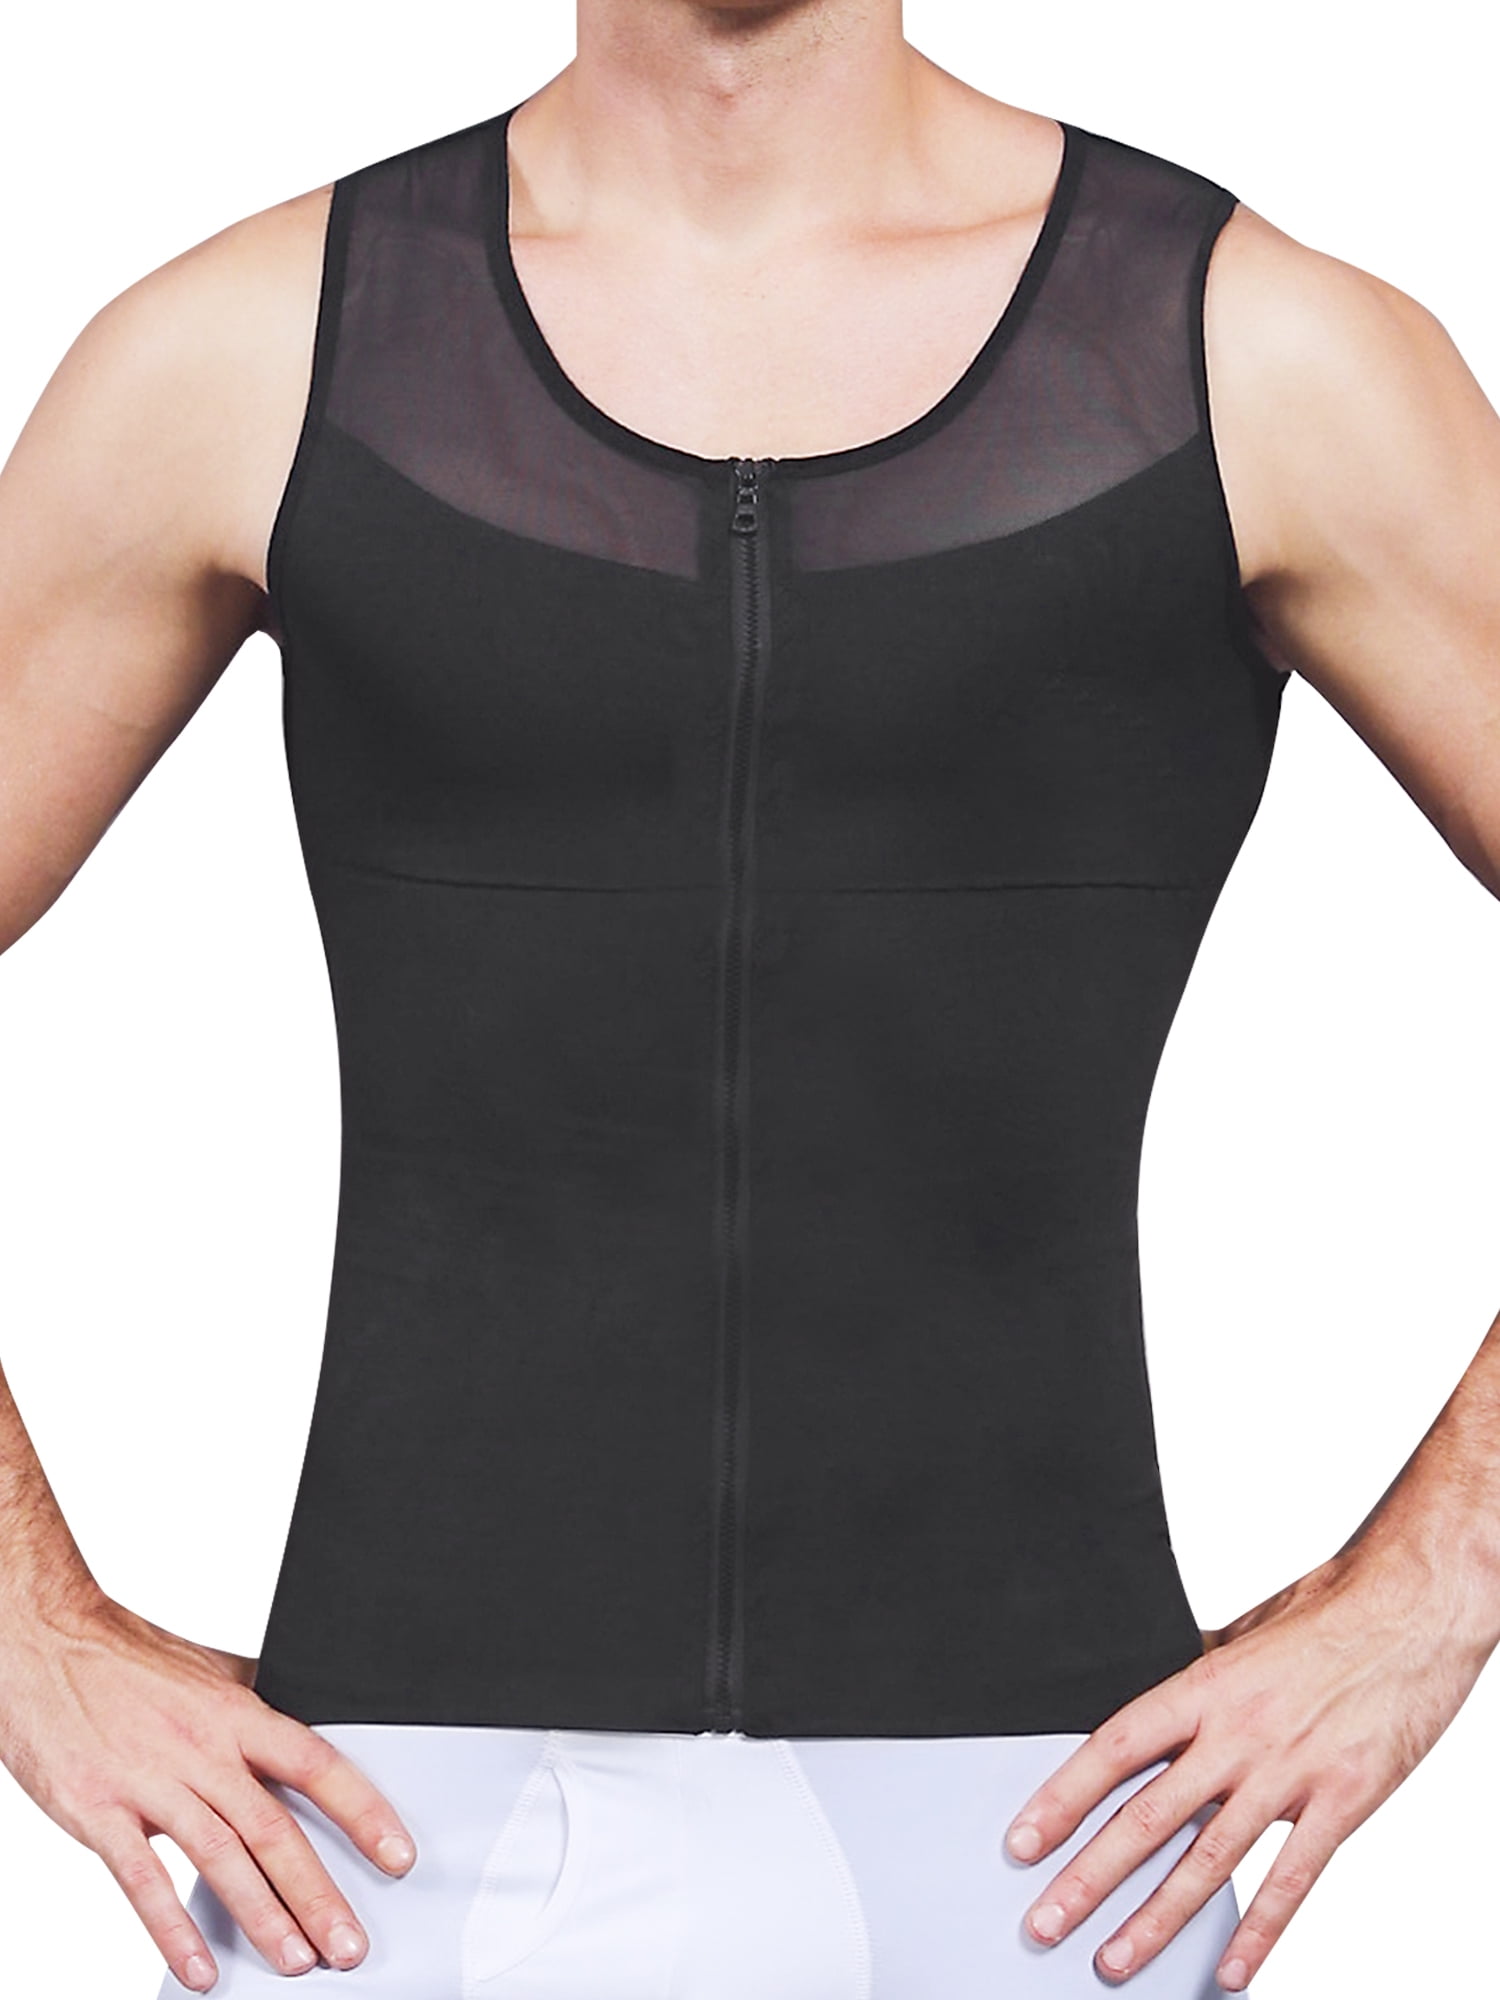 Vaslanda Mens Slimming Shaper Vest Compression Undershirts Moobs Tight Tank Top 